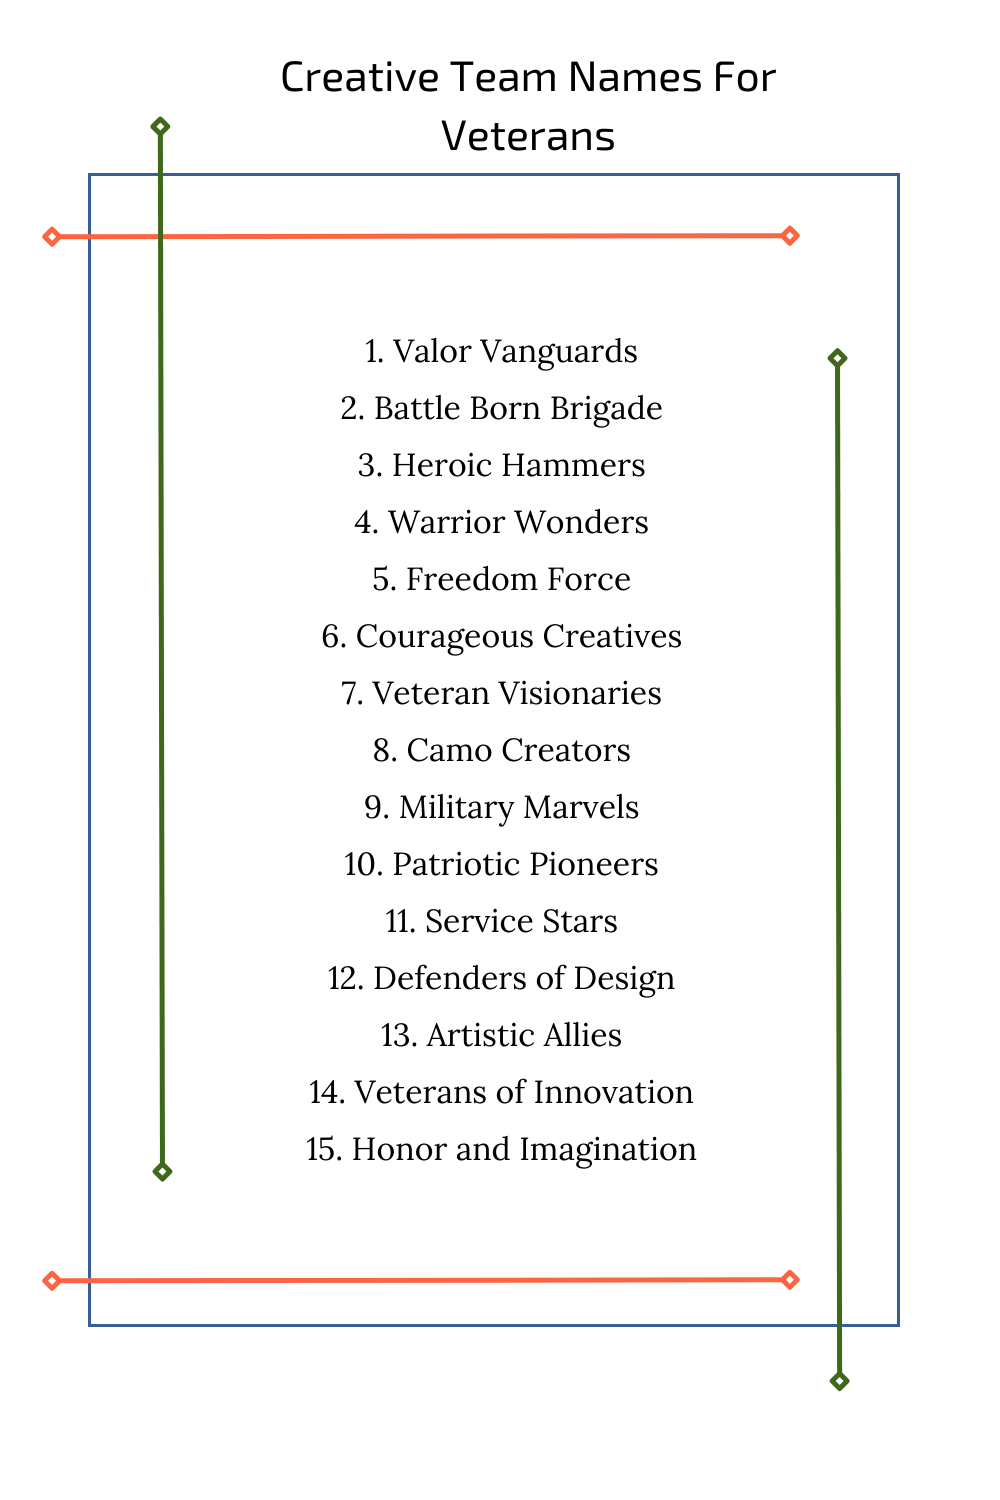 Creative Team Names For Veterans